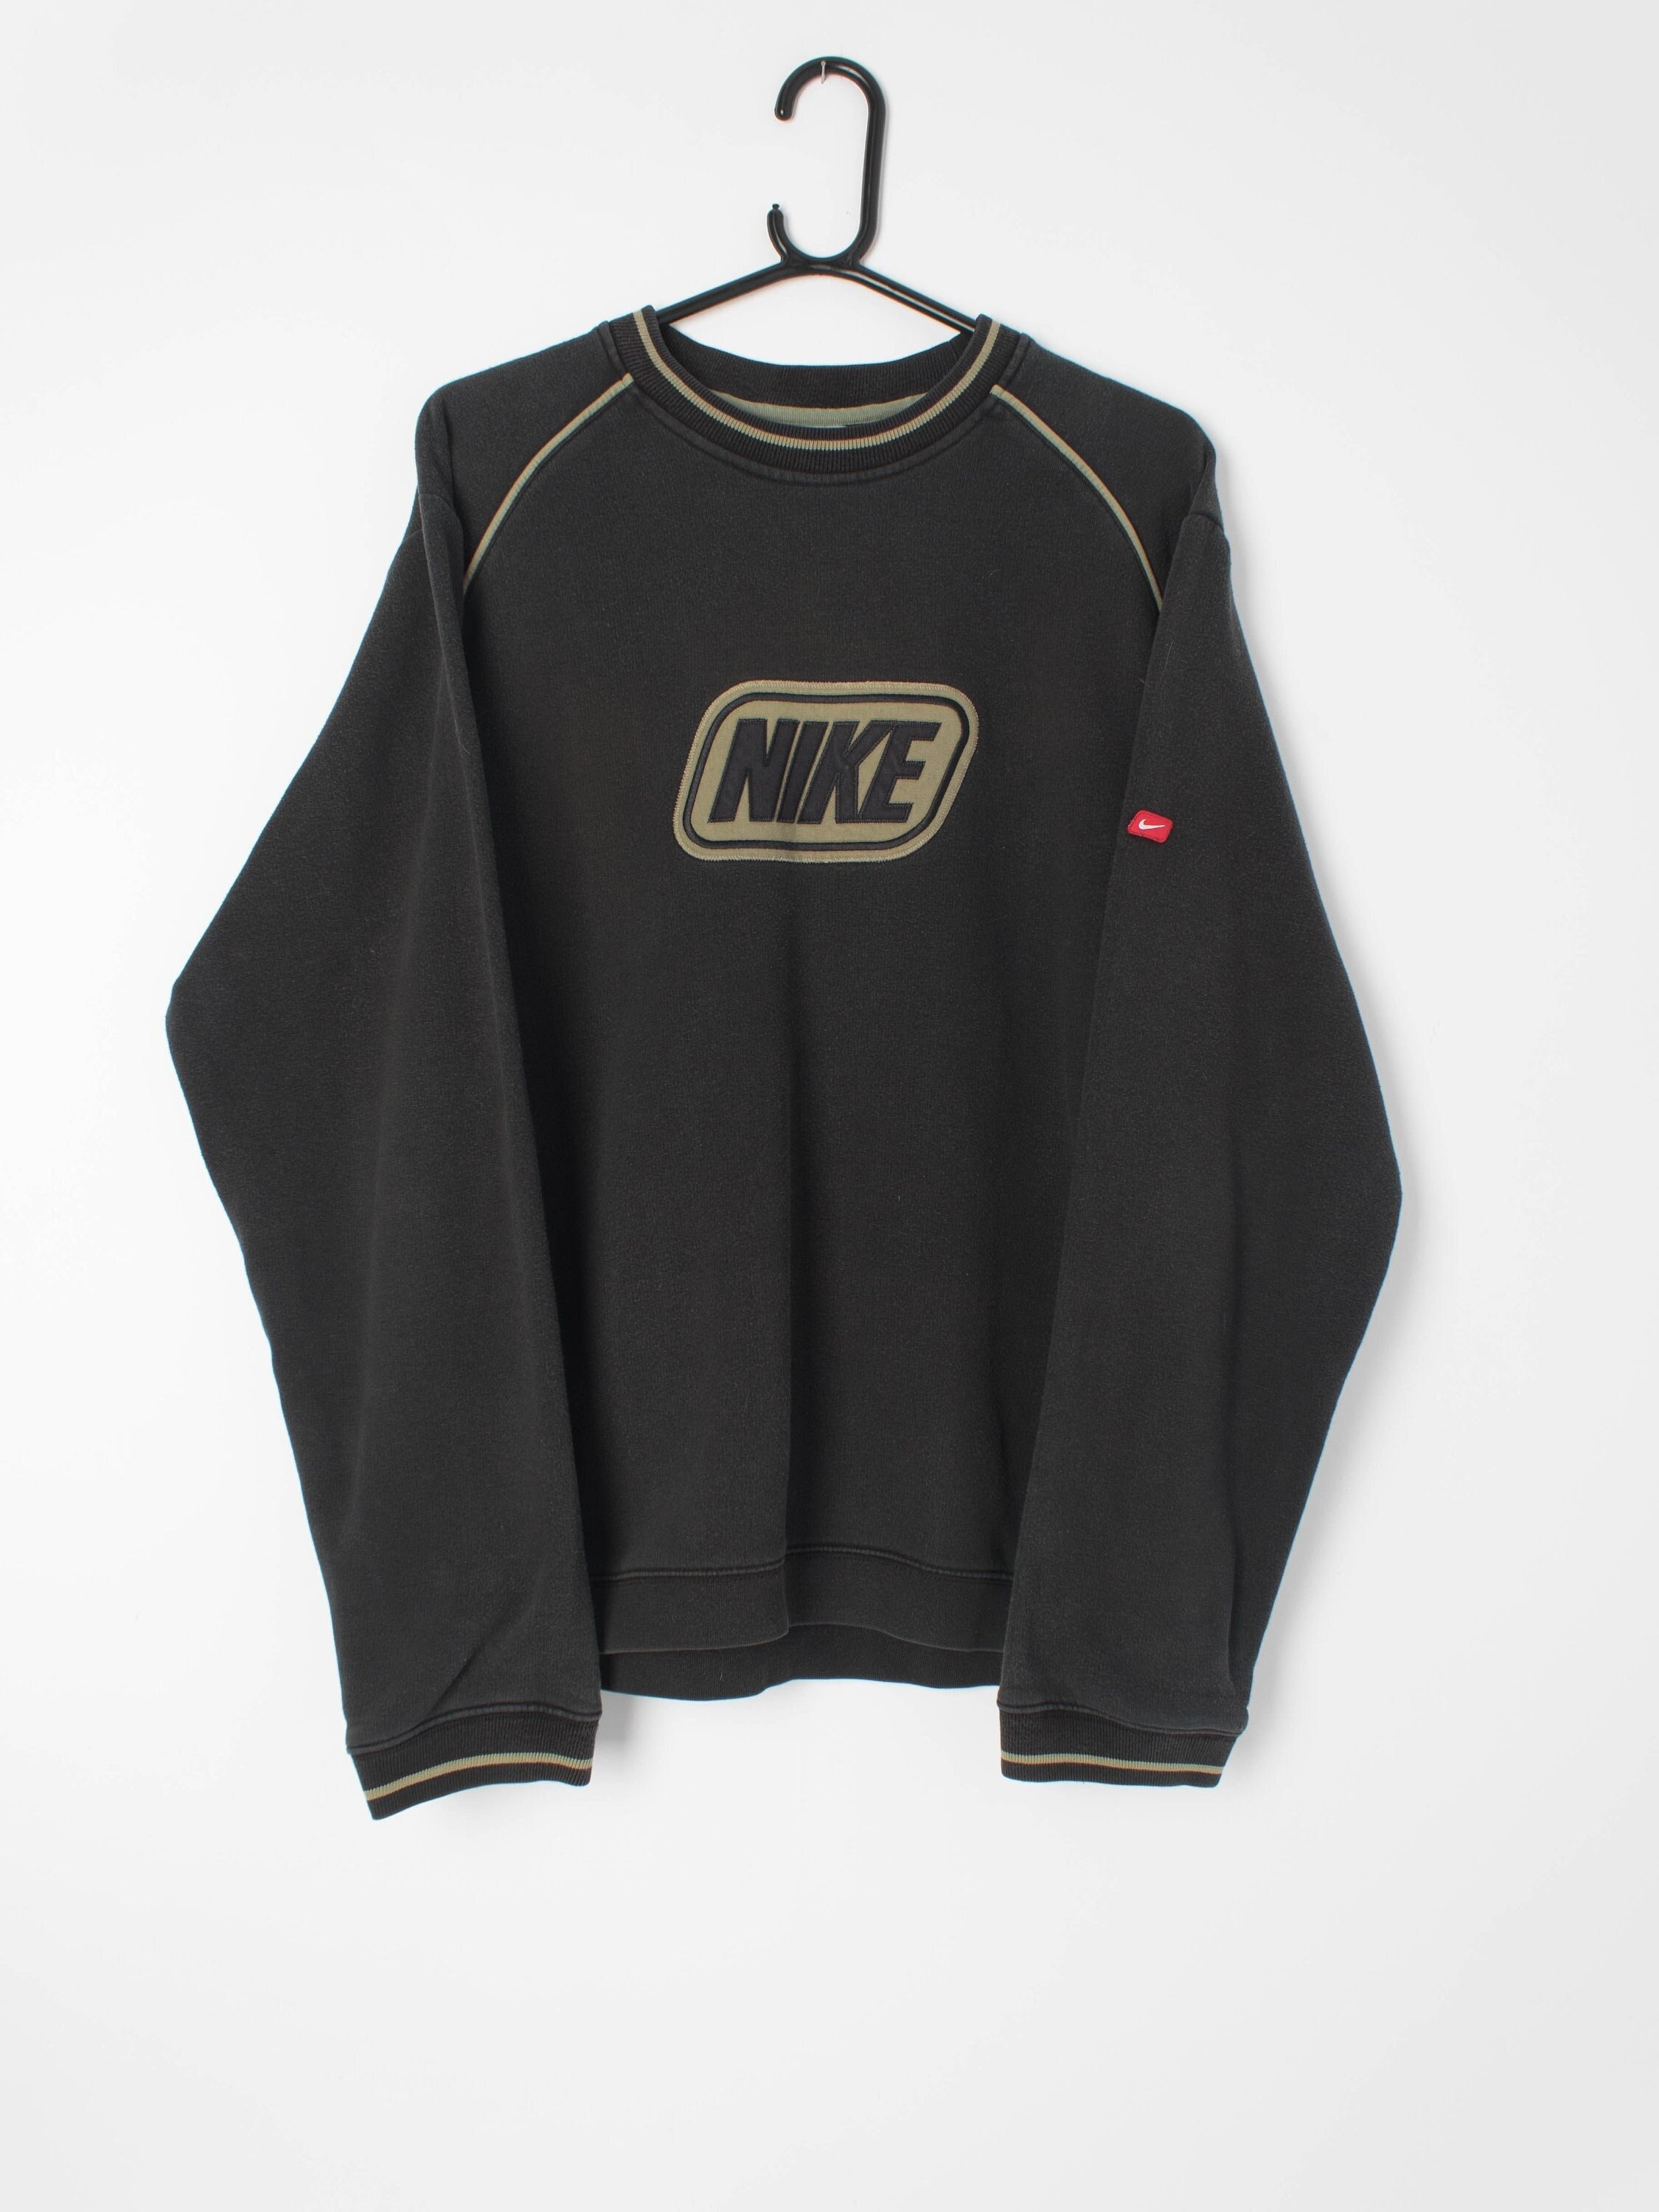 NIKE Sweatshirt 90s Faded Black Spellout Front -